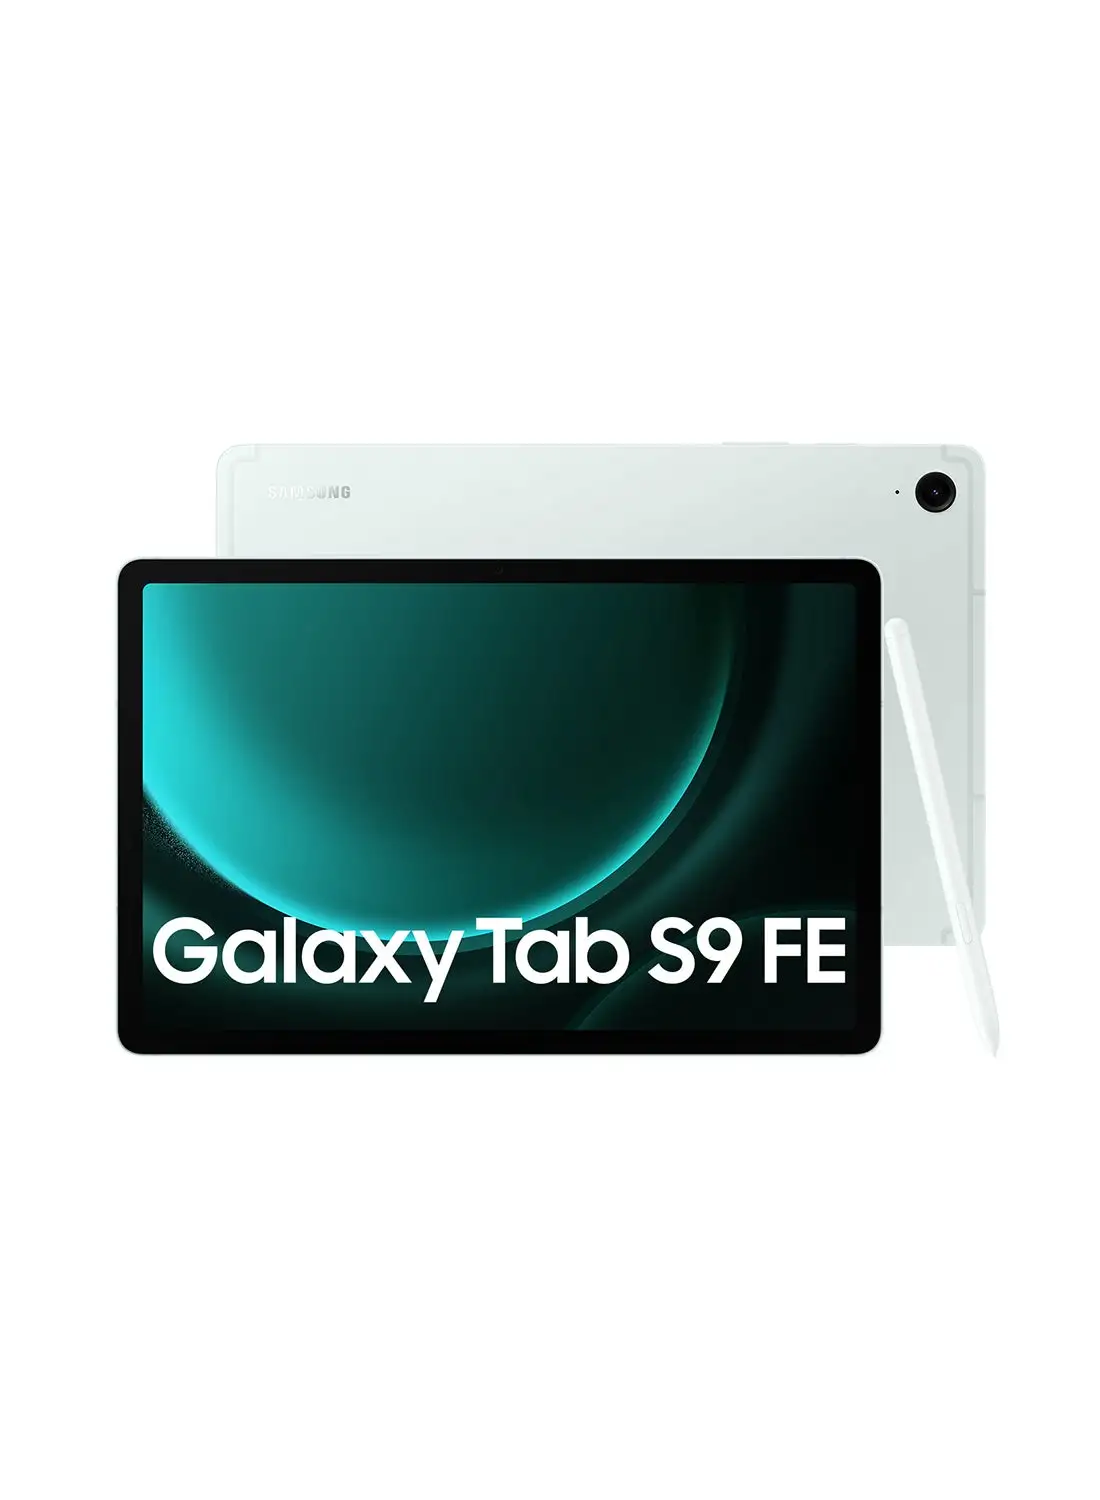 Samsung Galaxy Tab S9 FE Mint Green 6GB RAM 128GB Wifi - Middle East Version